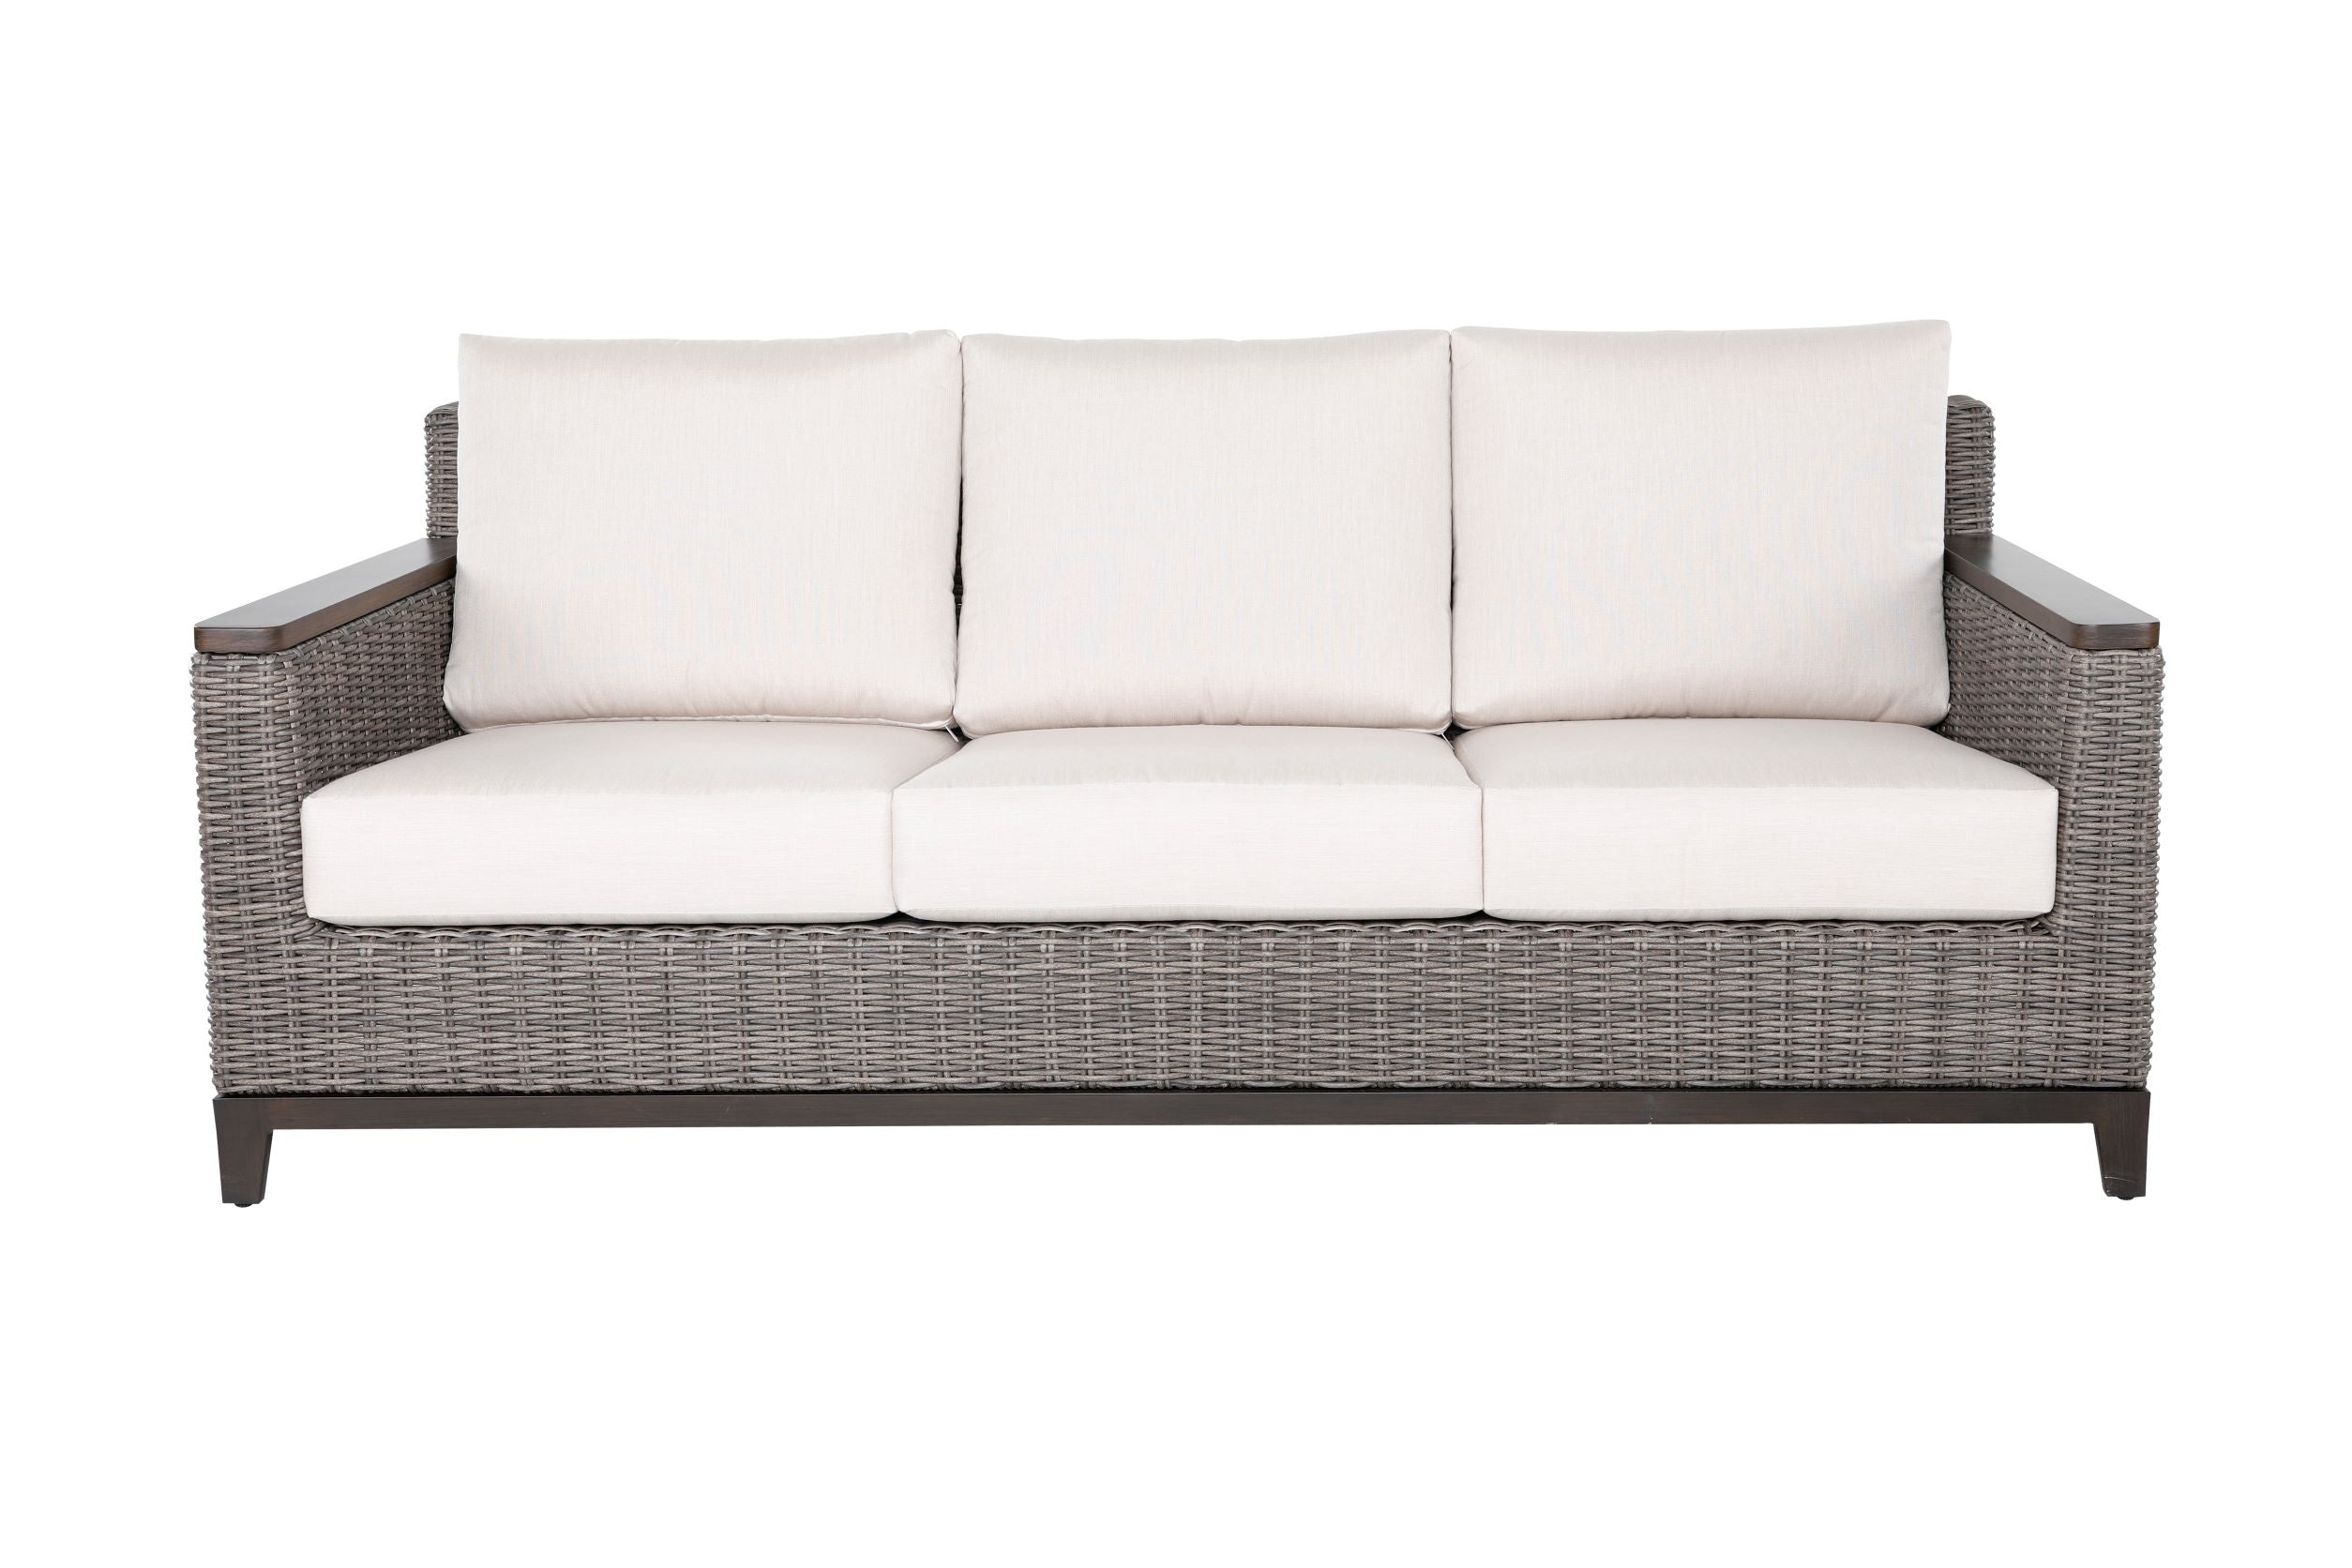 Patio Time Beaufort 4-piece Wicker Sofa Set